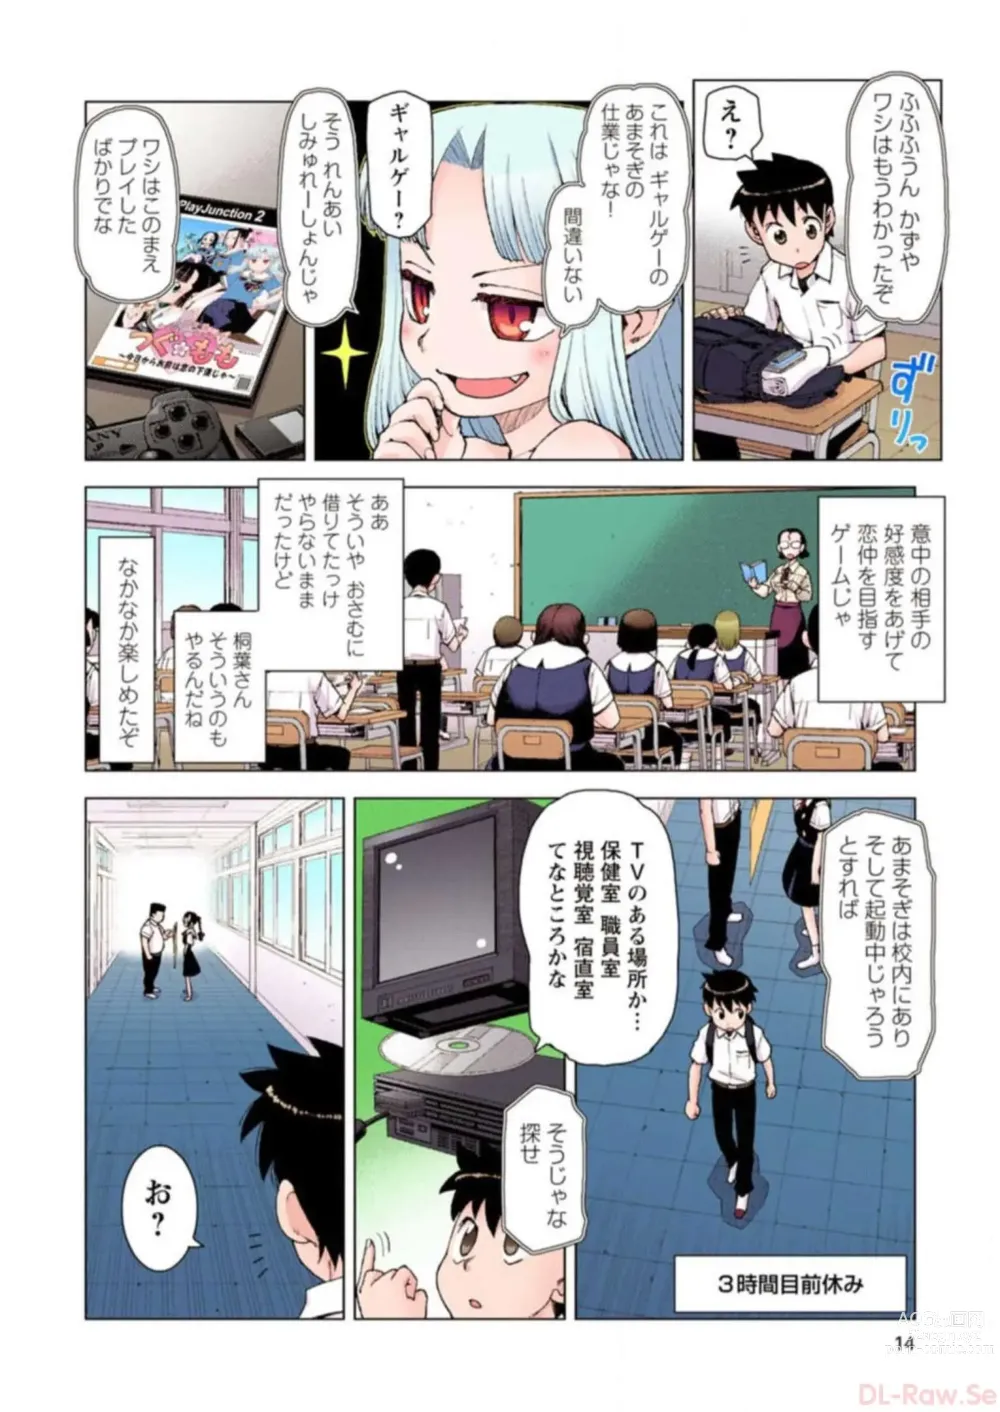 Page 14 of manga Tsugumomo Digital Colored Comics V3